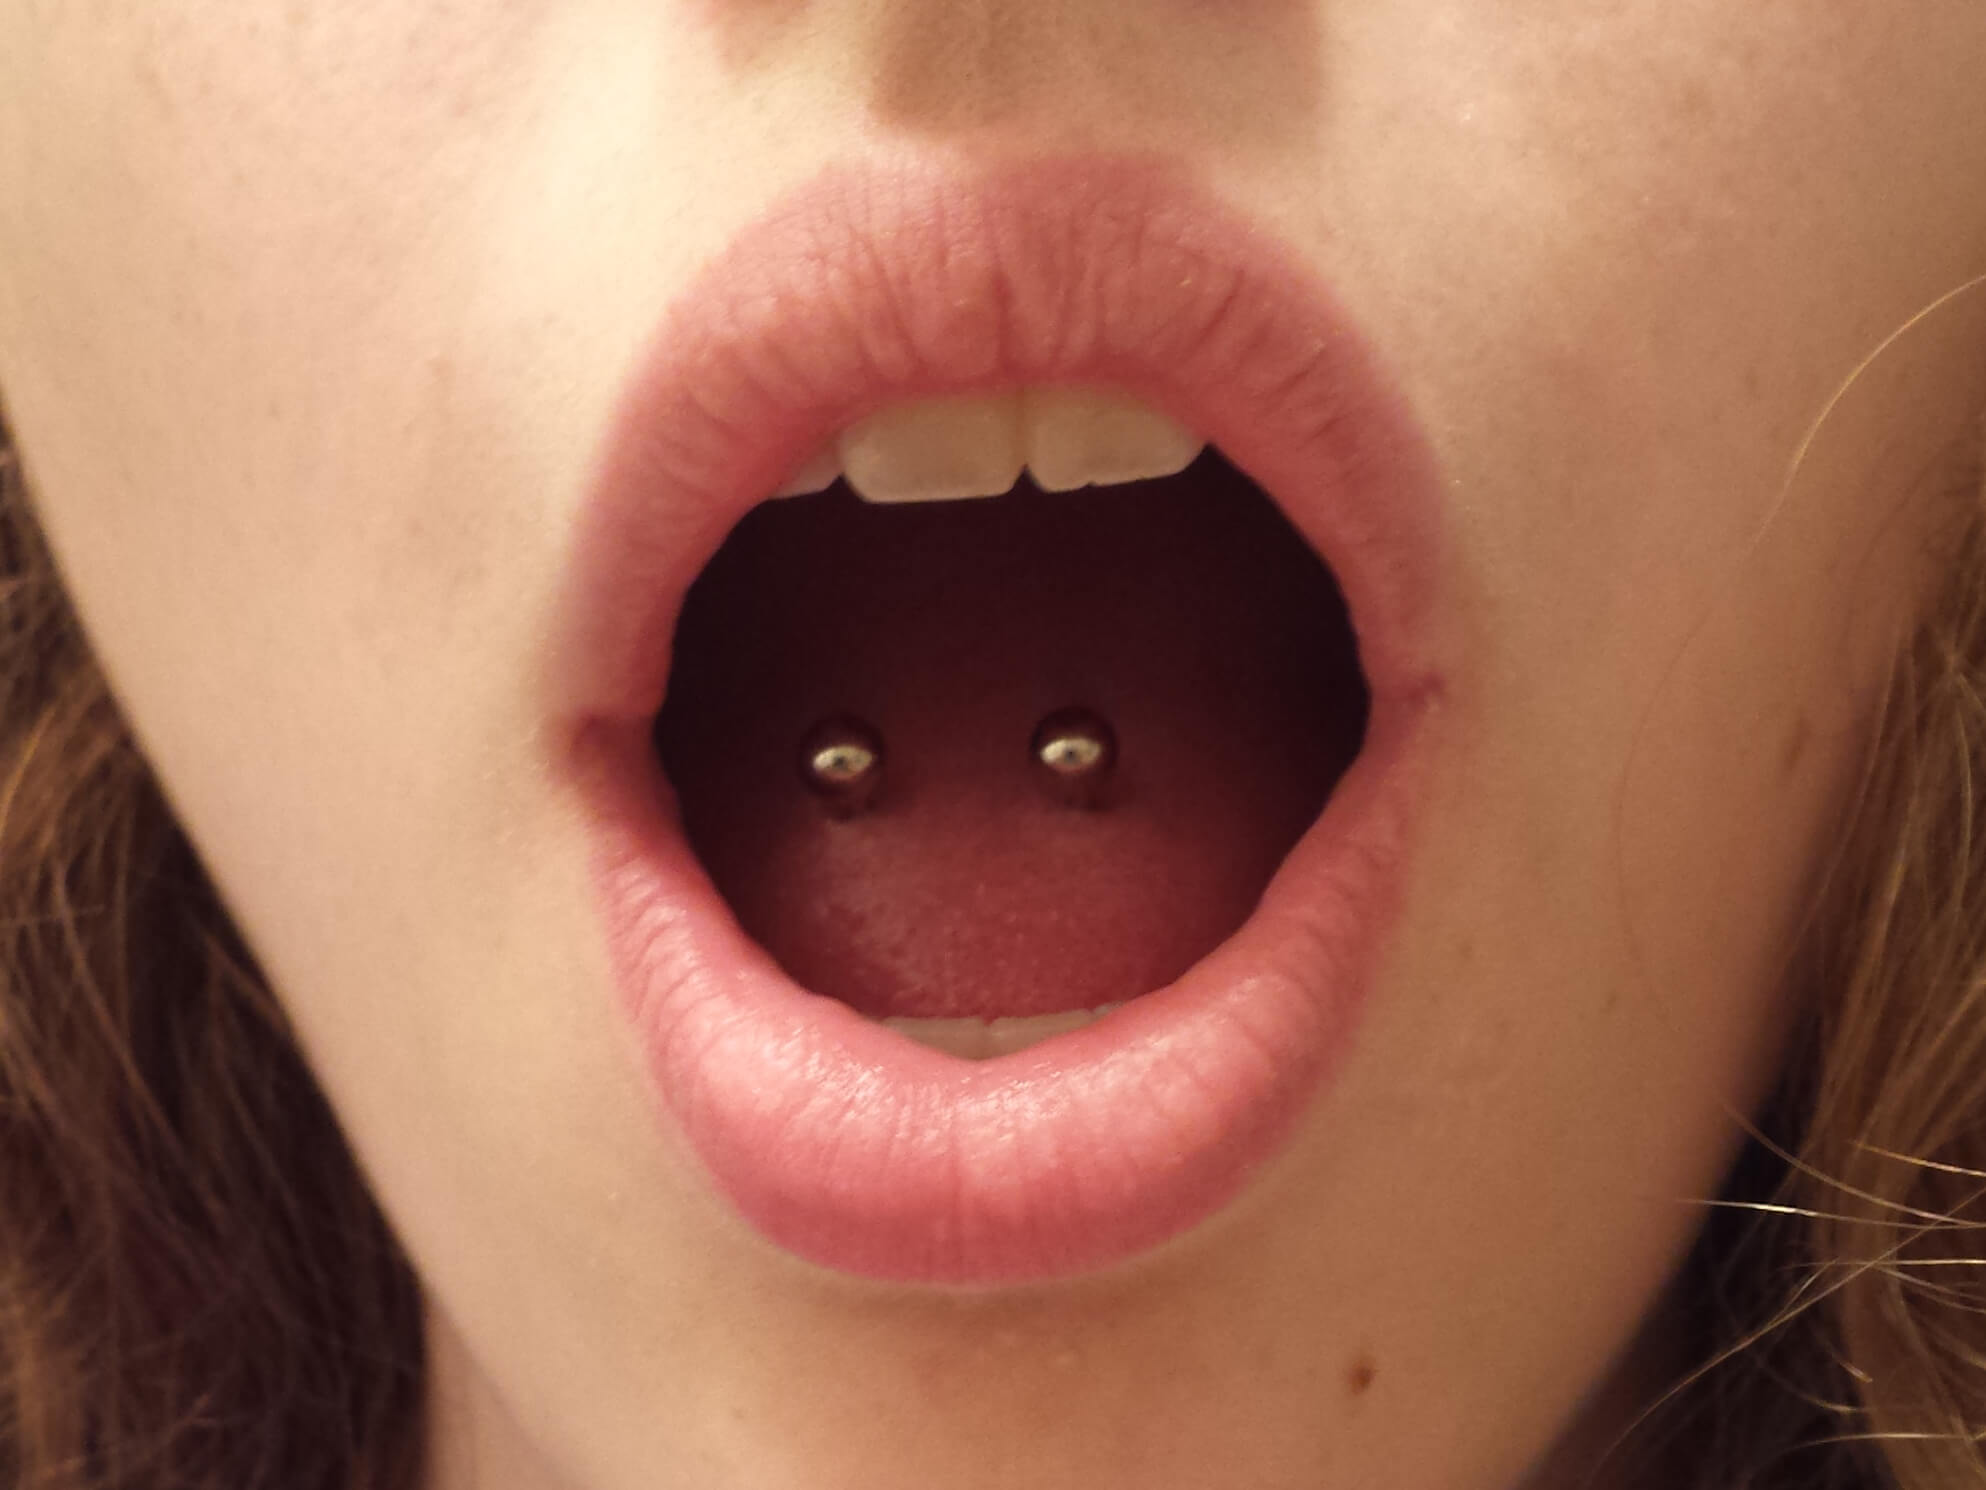  horizontal tongue piercing